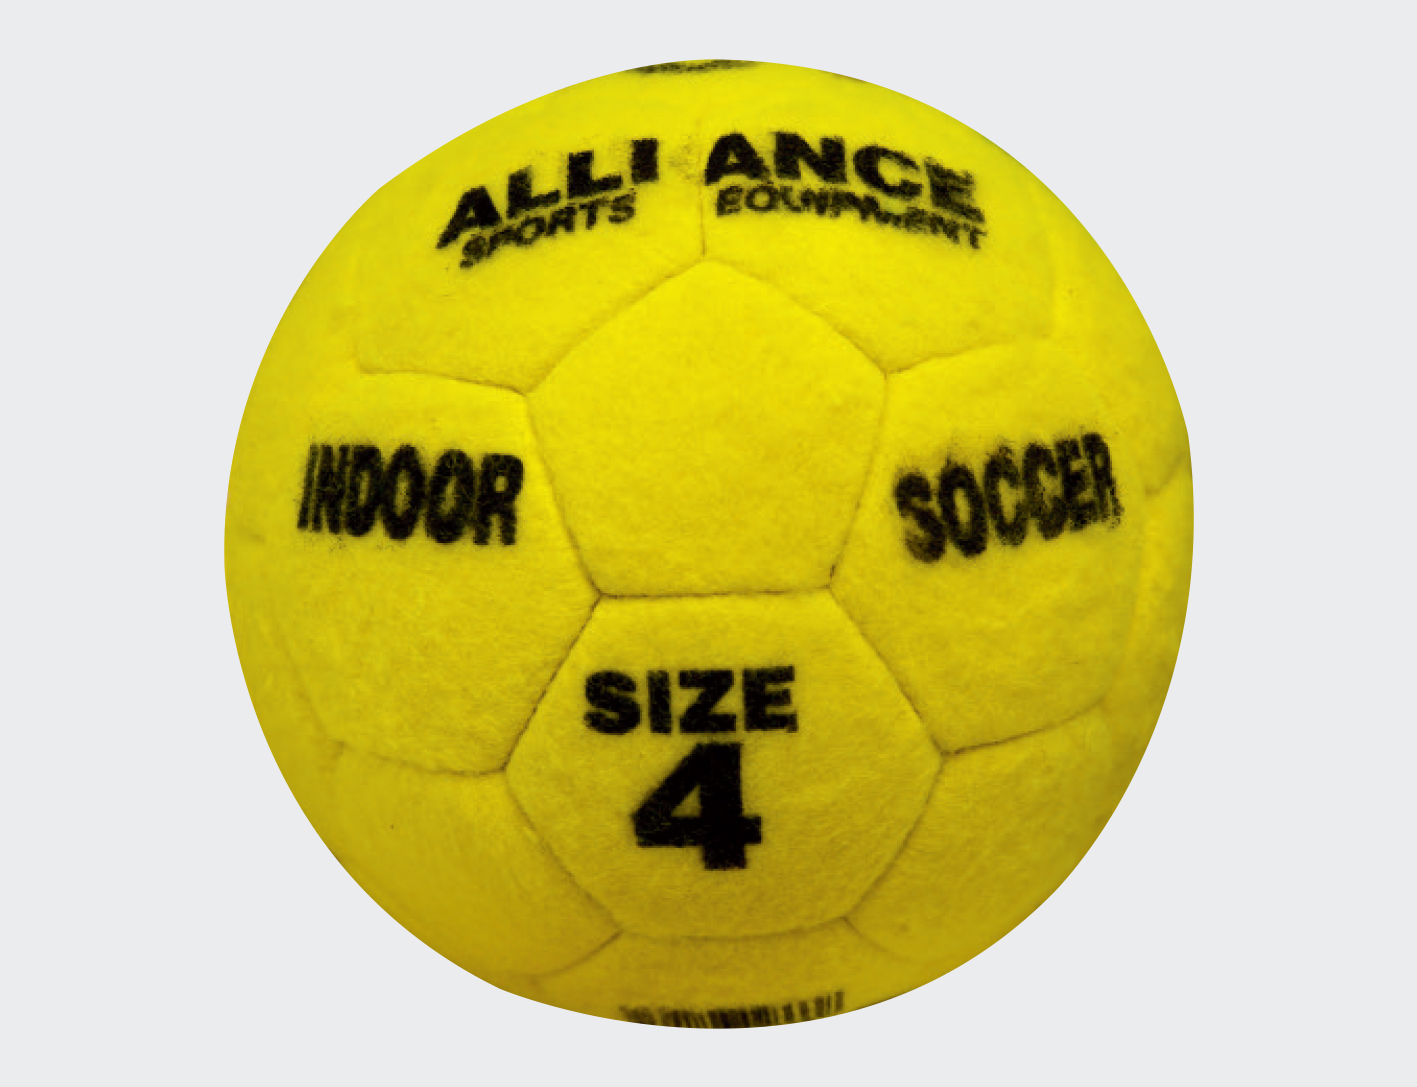 Standard Indoor Soccer Ball Size 4